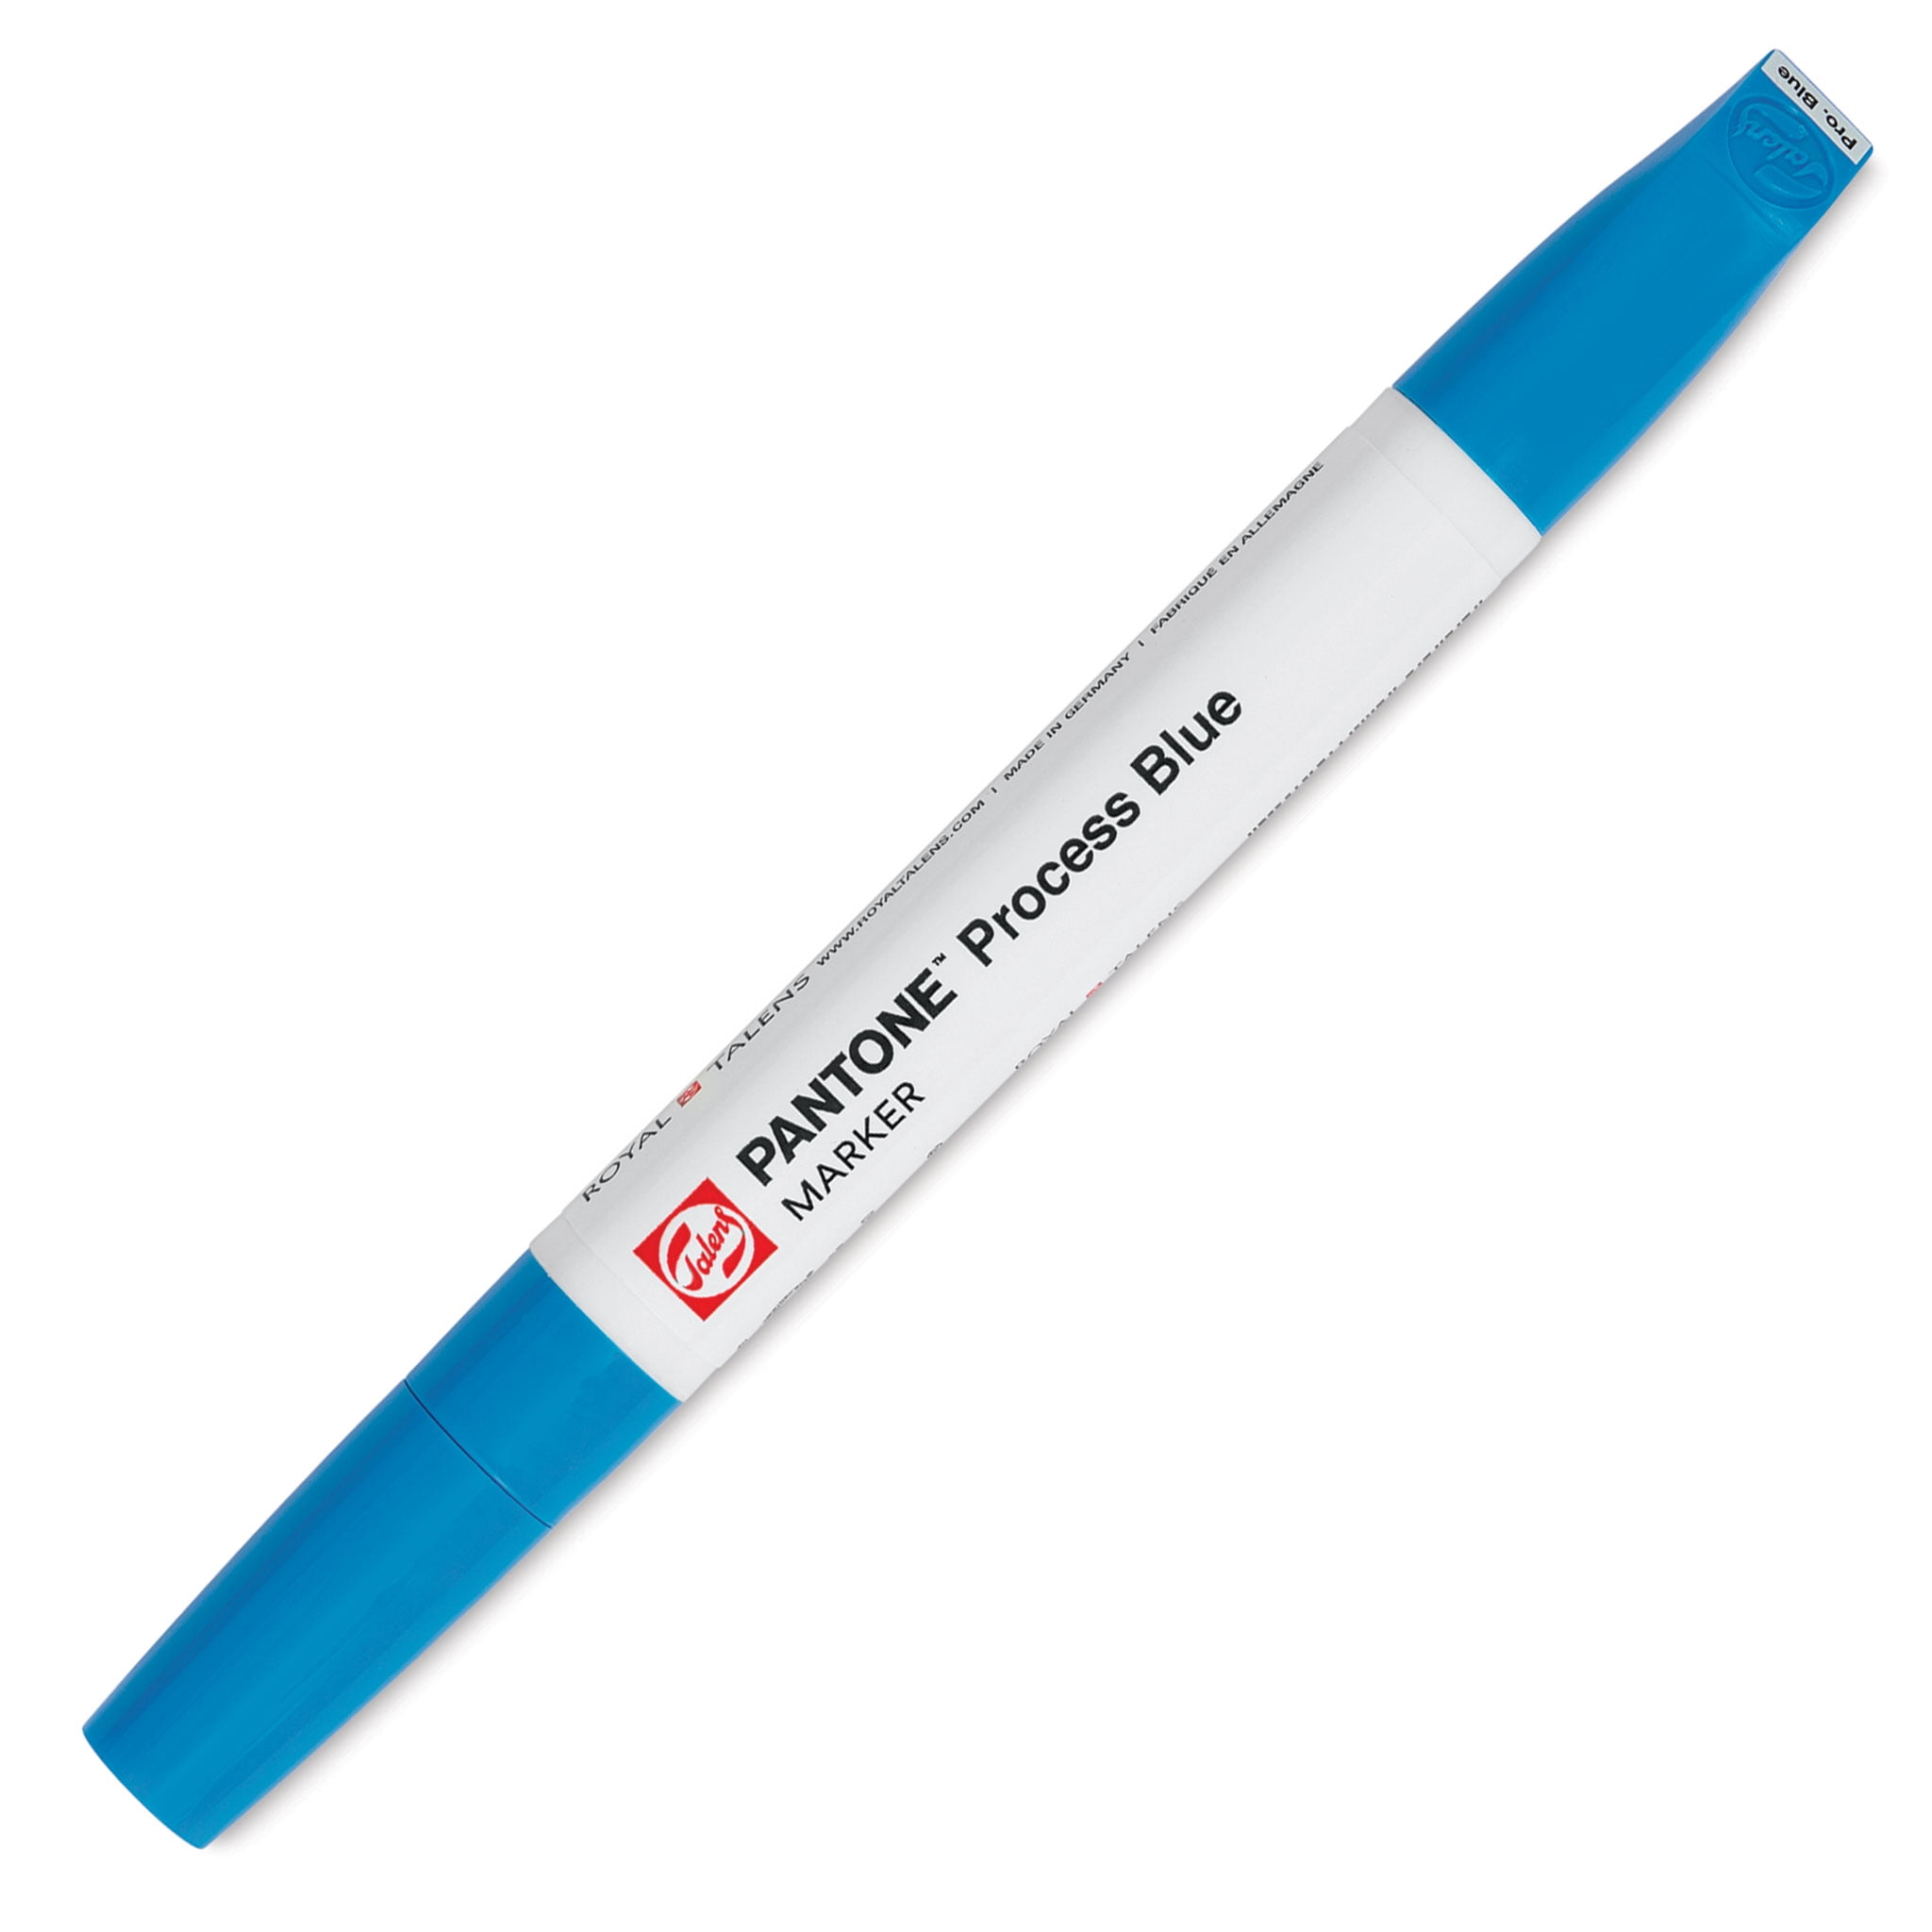 Pantone Dual Tip Marker - Process Blue 